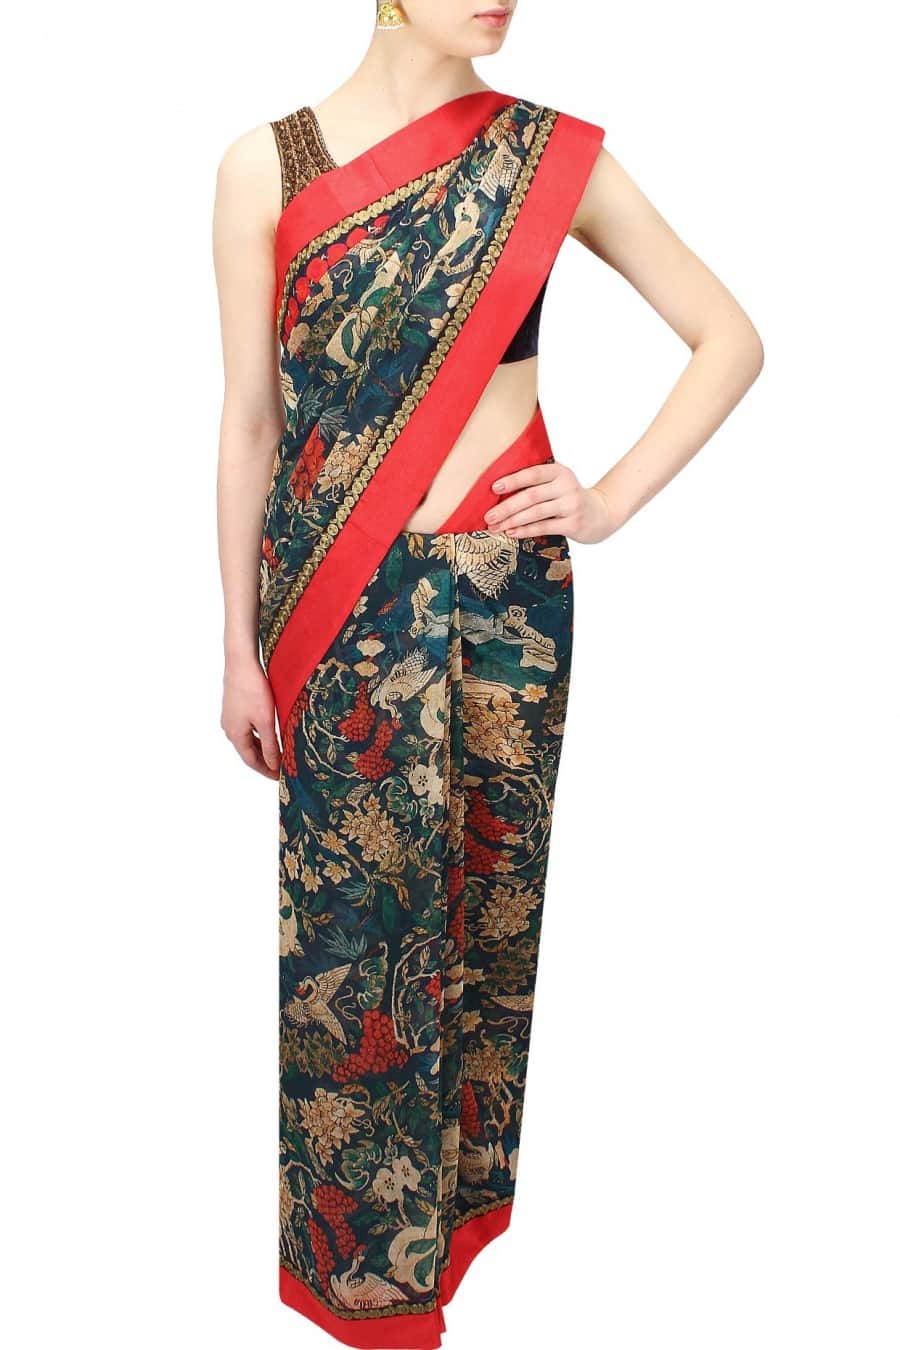 Blue Forest Printed Sari